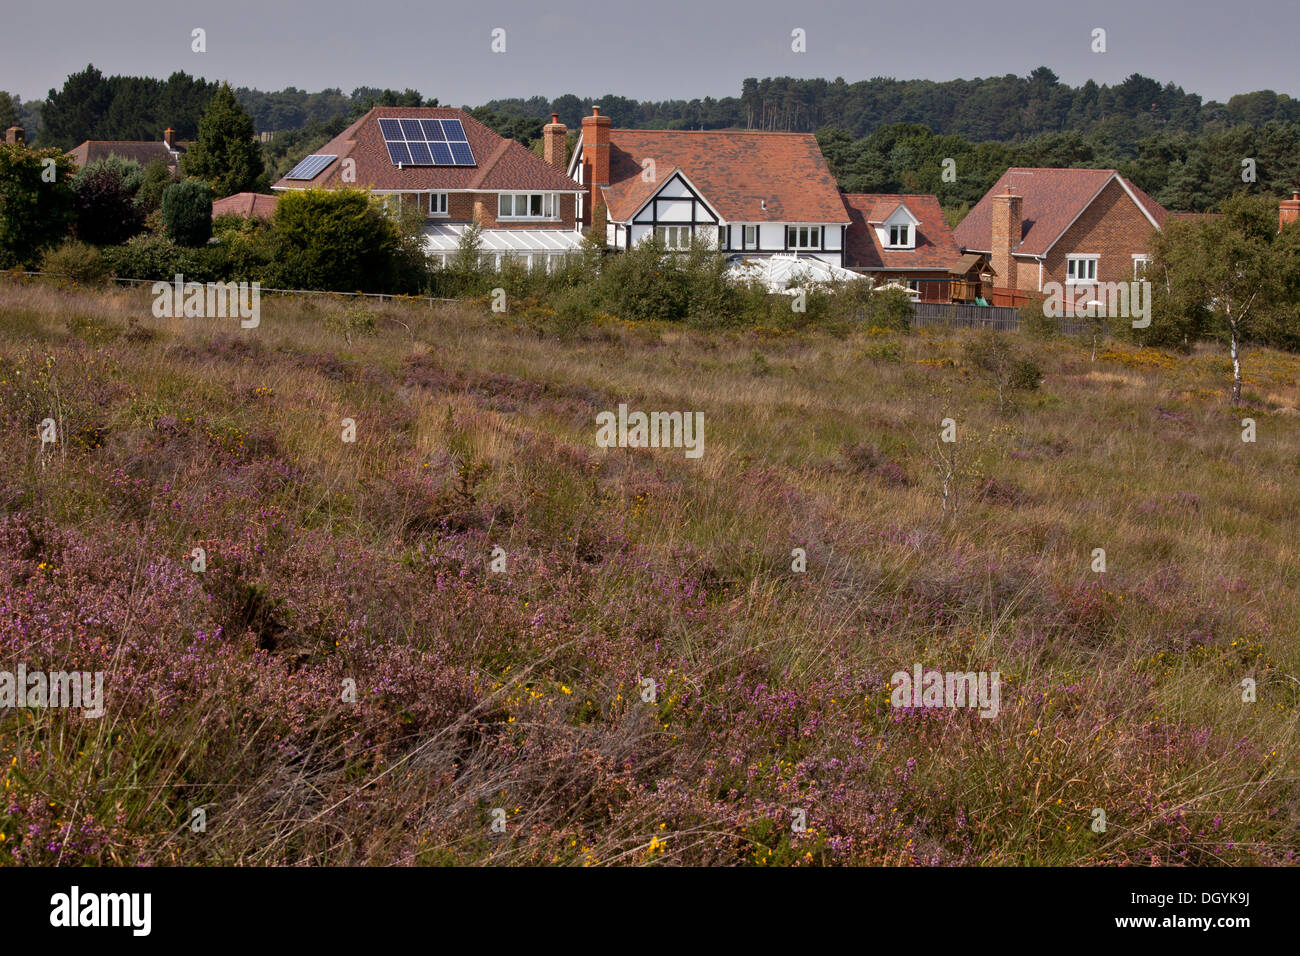 Housing development along the edge of internationally-important heathland, Dunyeats Hill, Poole Basin, Dorset. Stock Photo